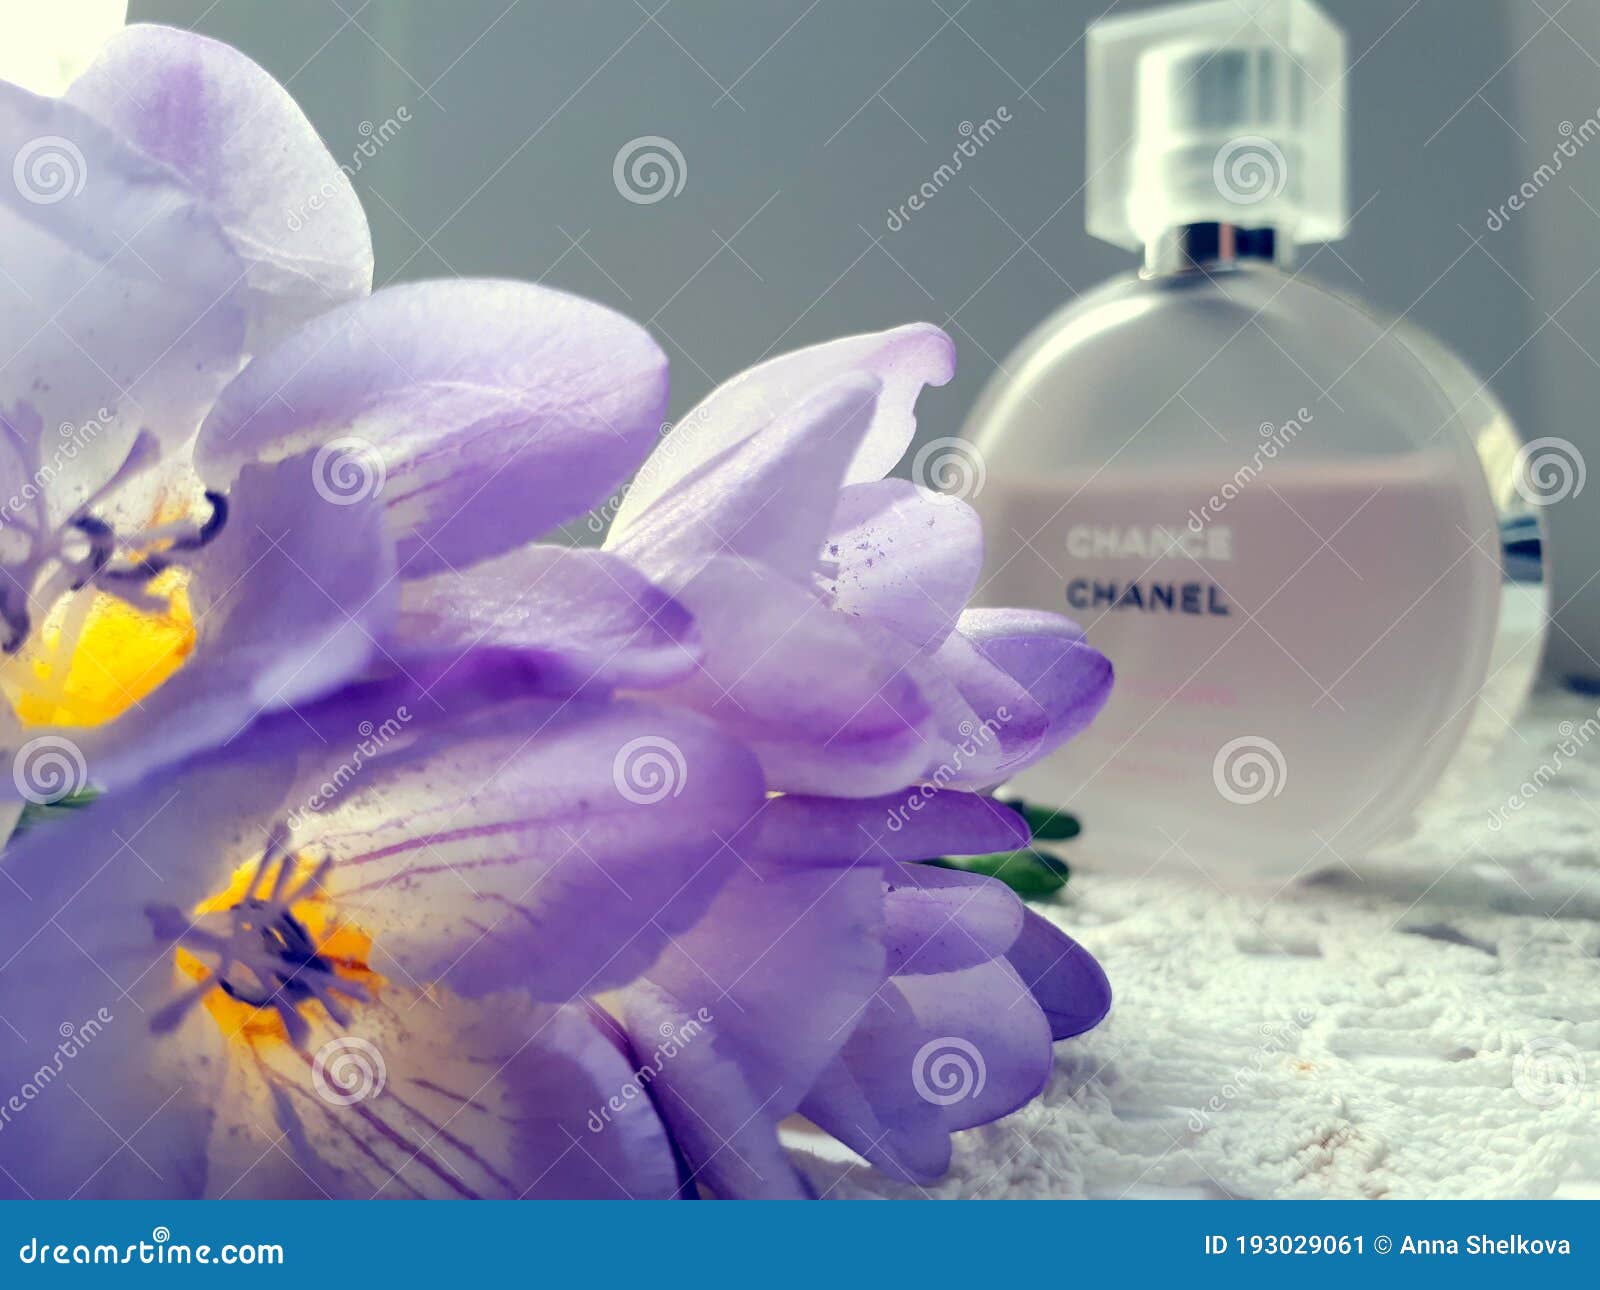 Chanel Chance Perfume a Background of Beautiful Purple Flowers